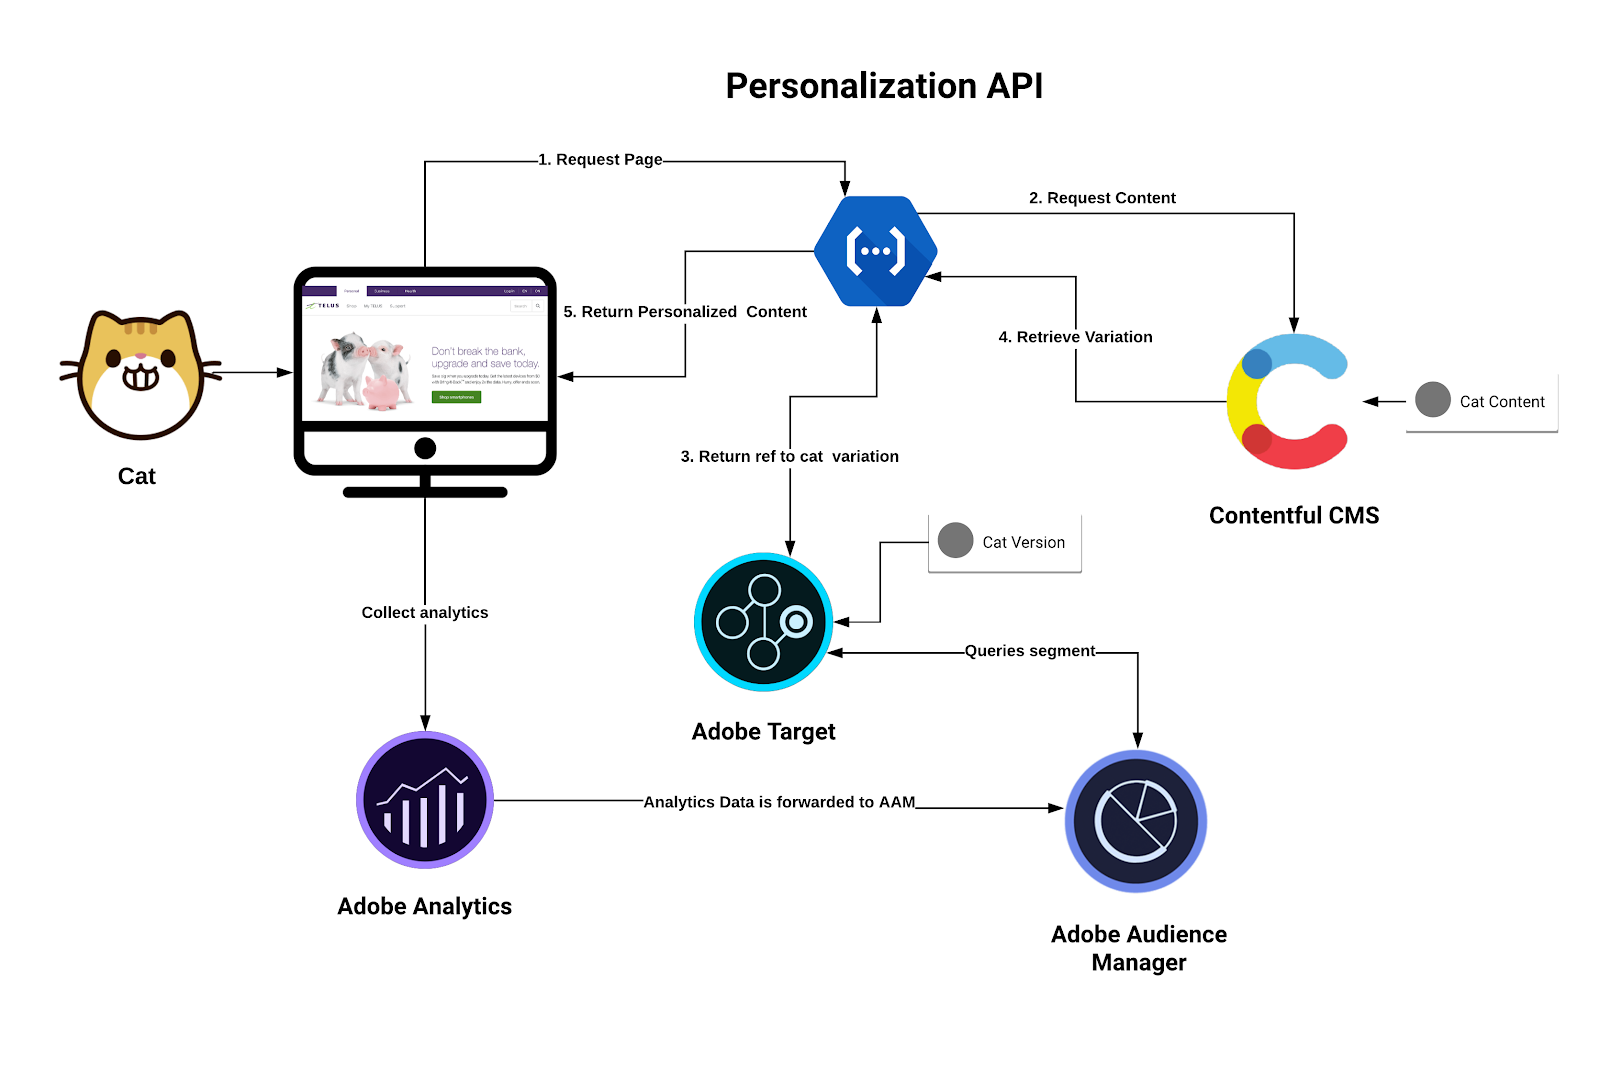 API example personalization